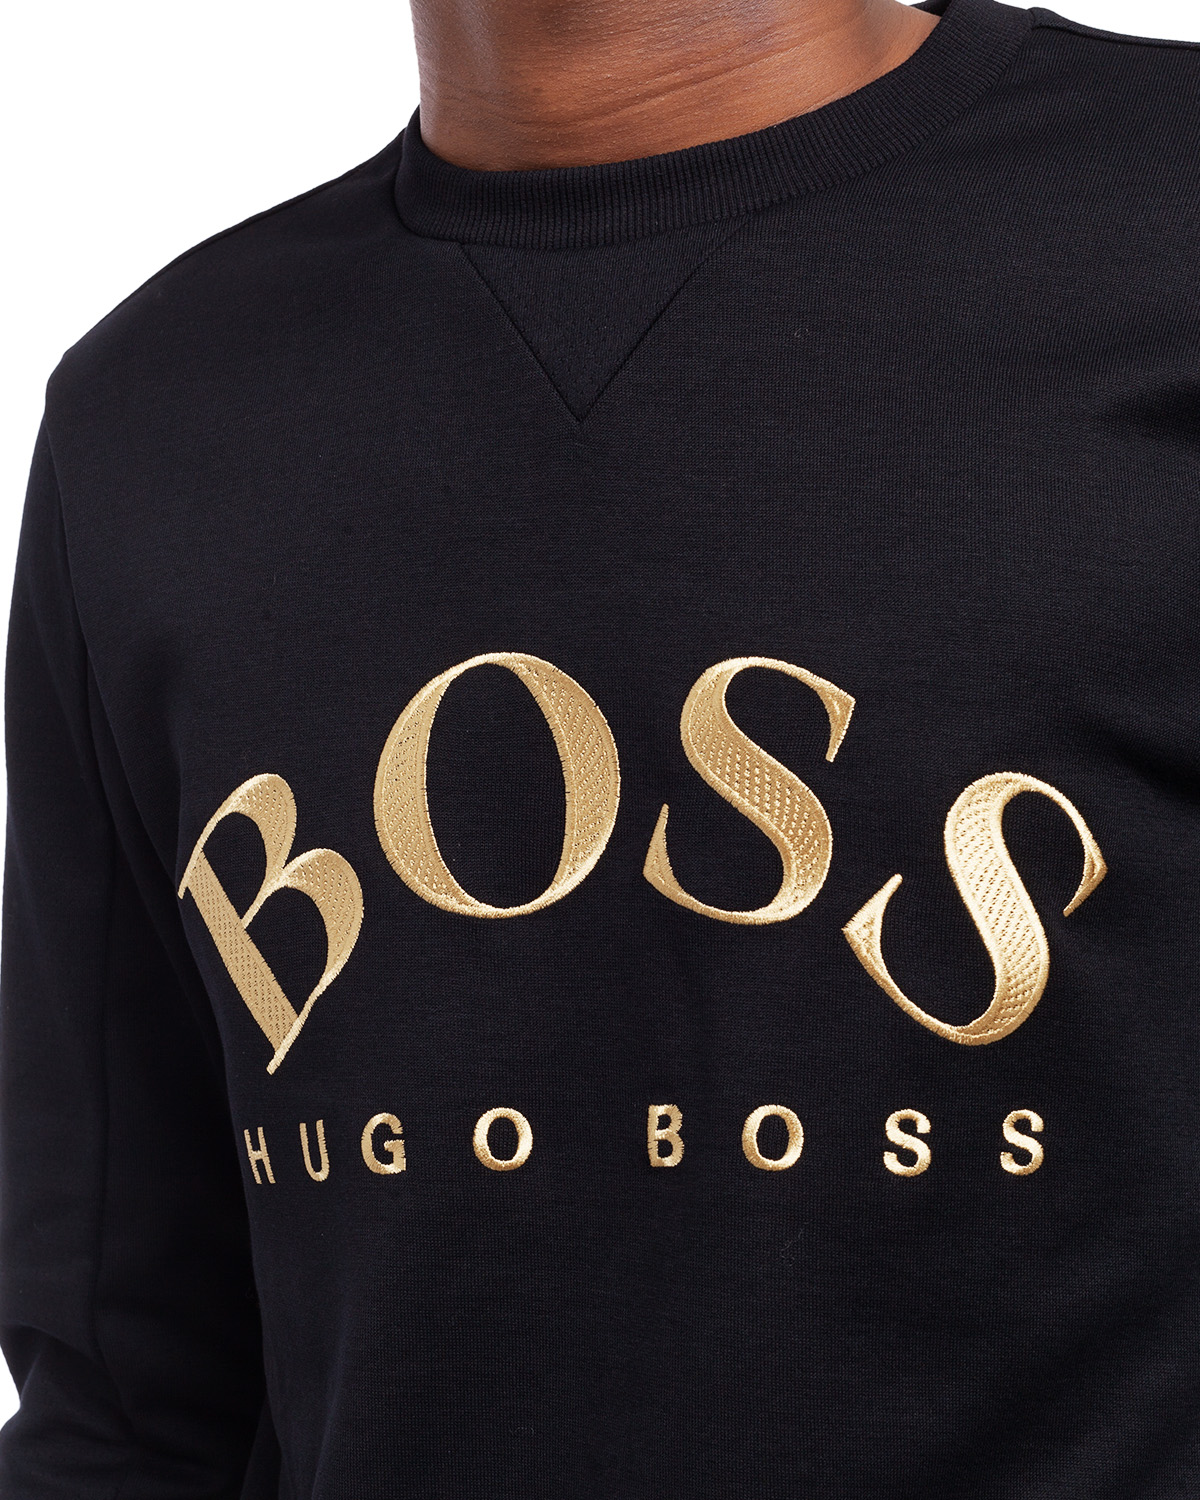 hugo boss jumper black and gold 